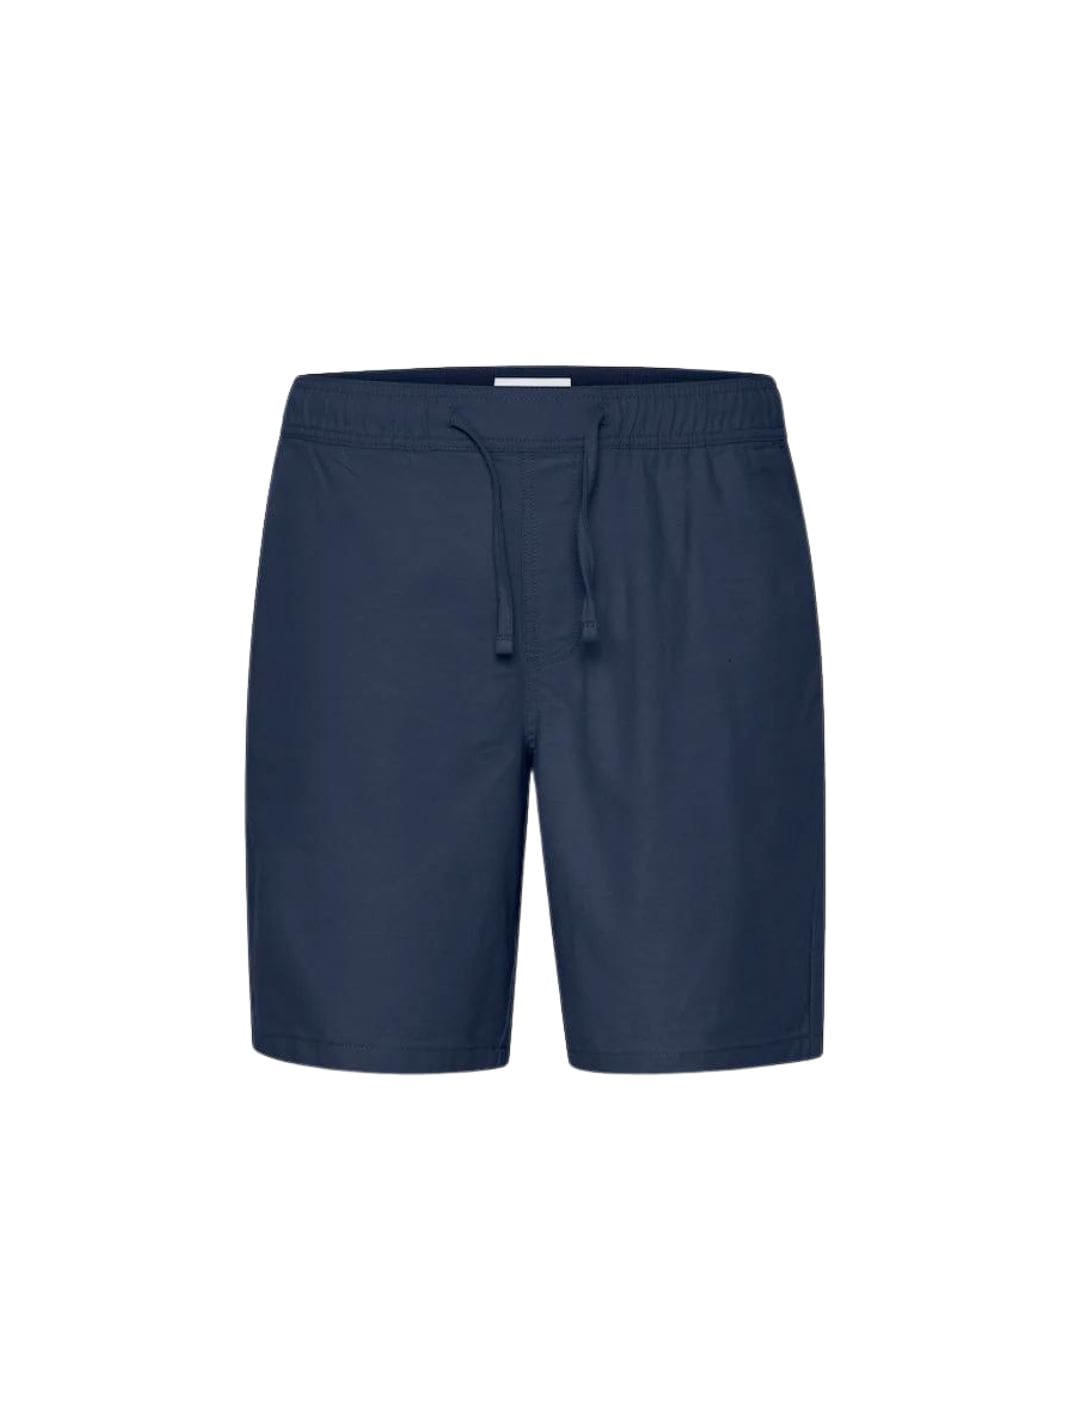 Casual Friday Shorts Shorts | Phelix Dyed Drawstring Dark Navy